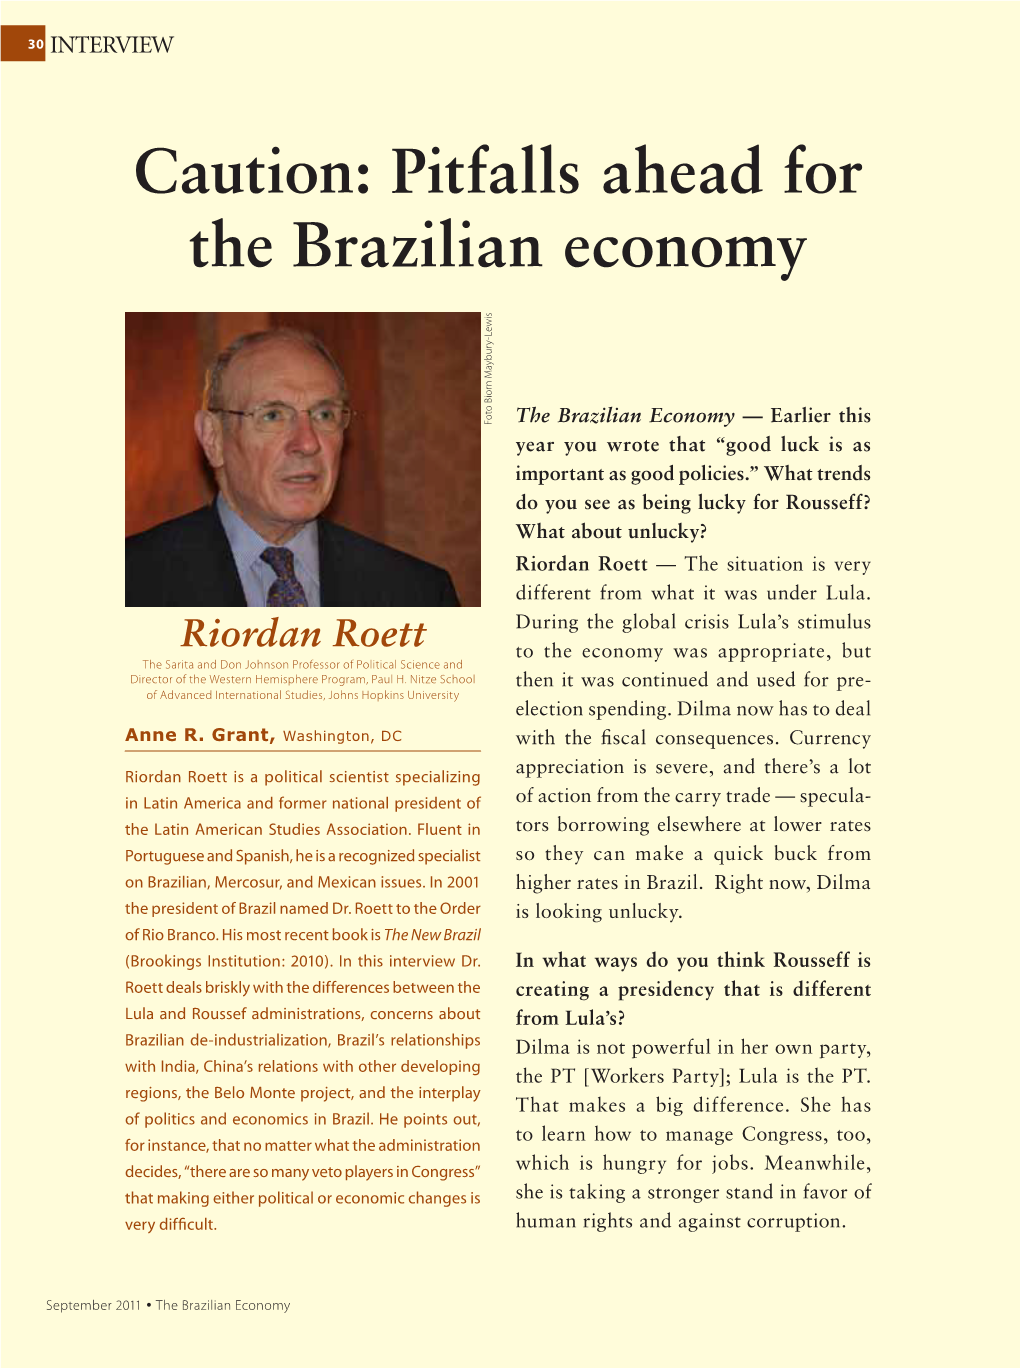 Caution: Pitfalls Ahead for the Brazilian Economy